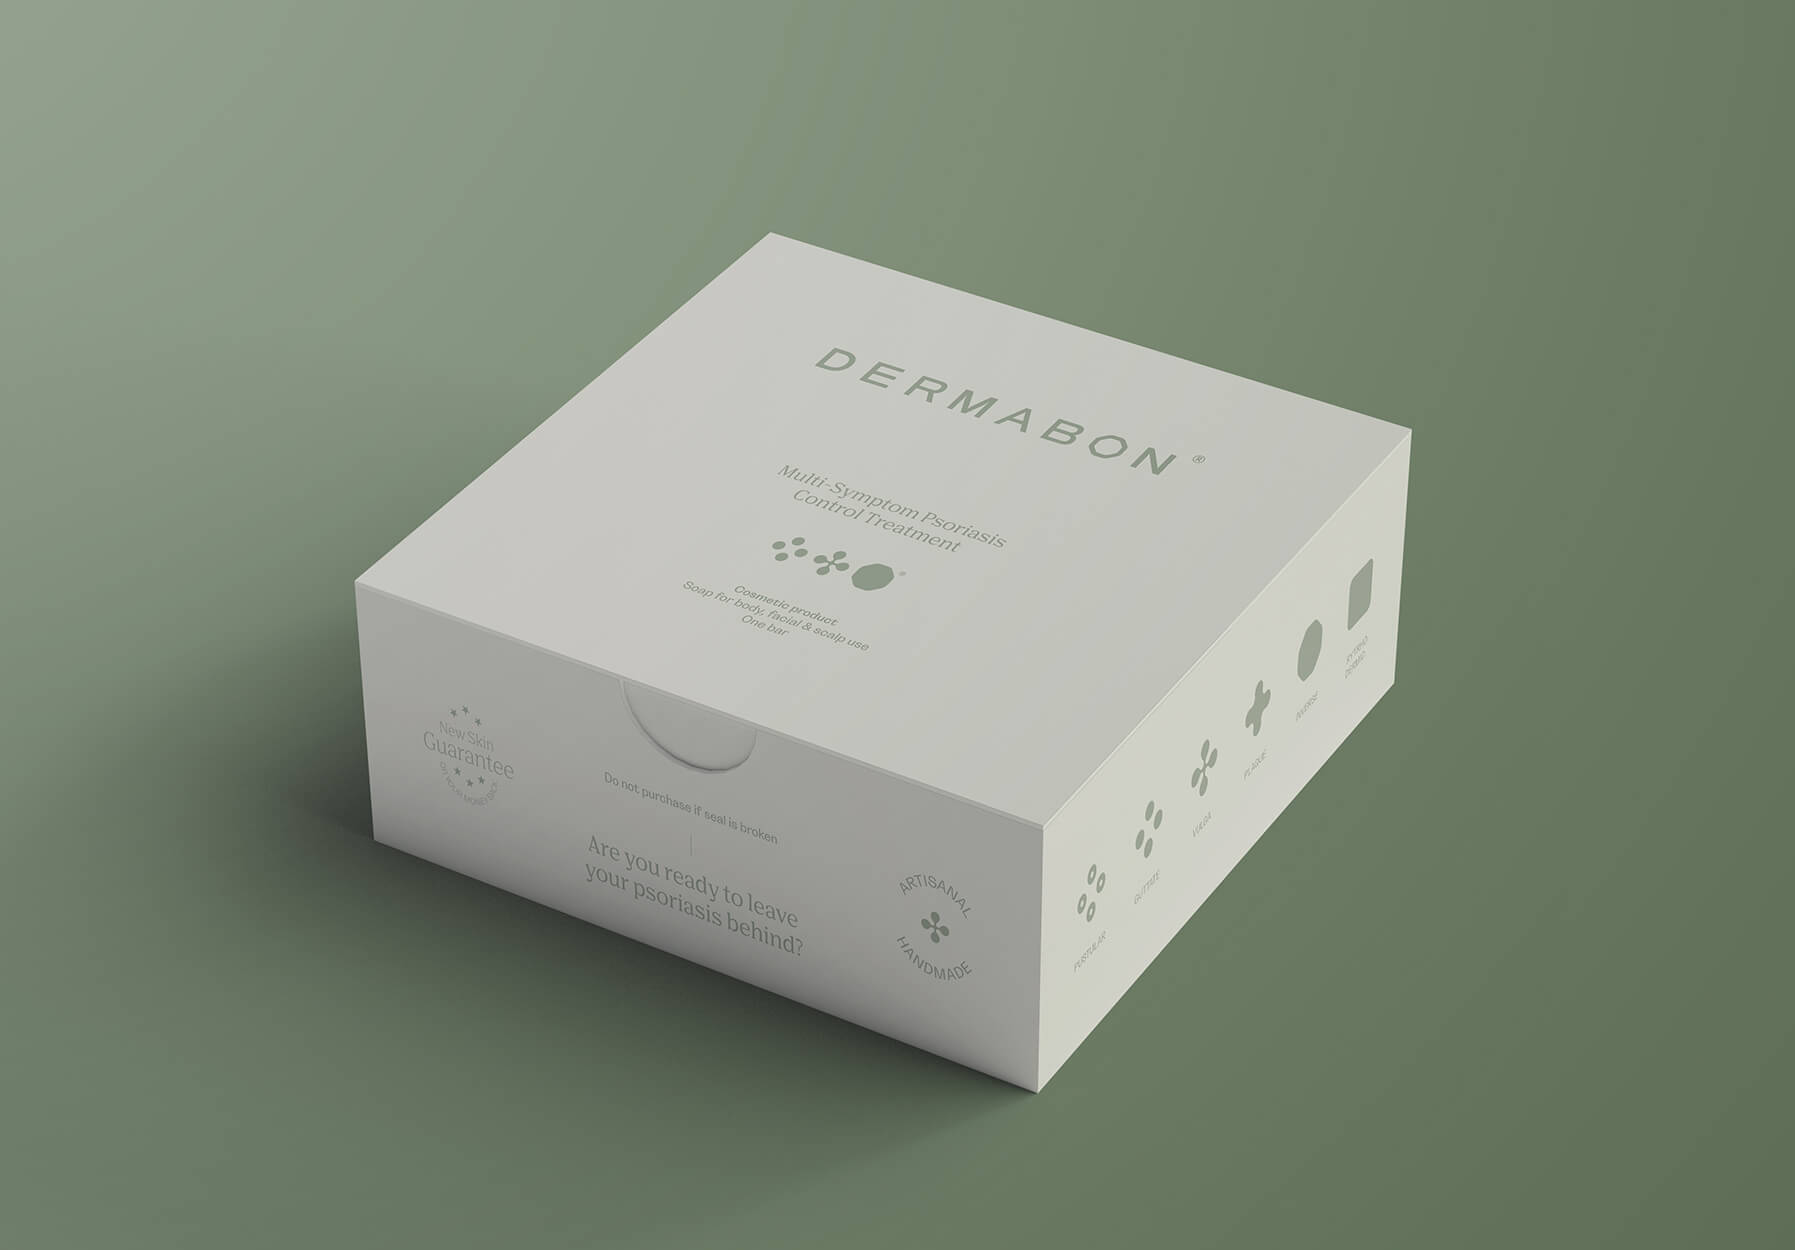 Dermabon: Single Product Packaging design by Phidev